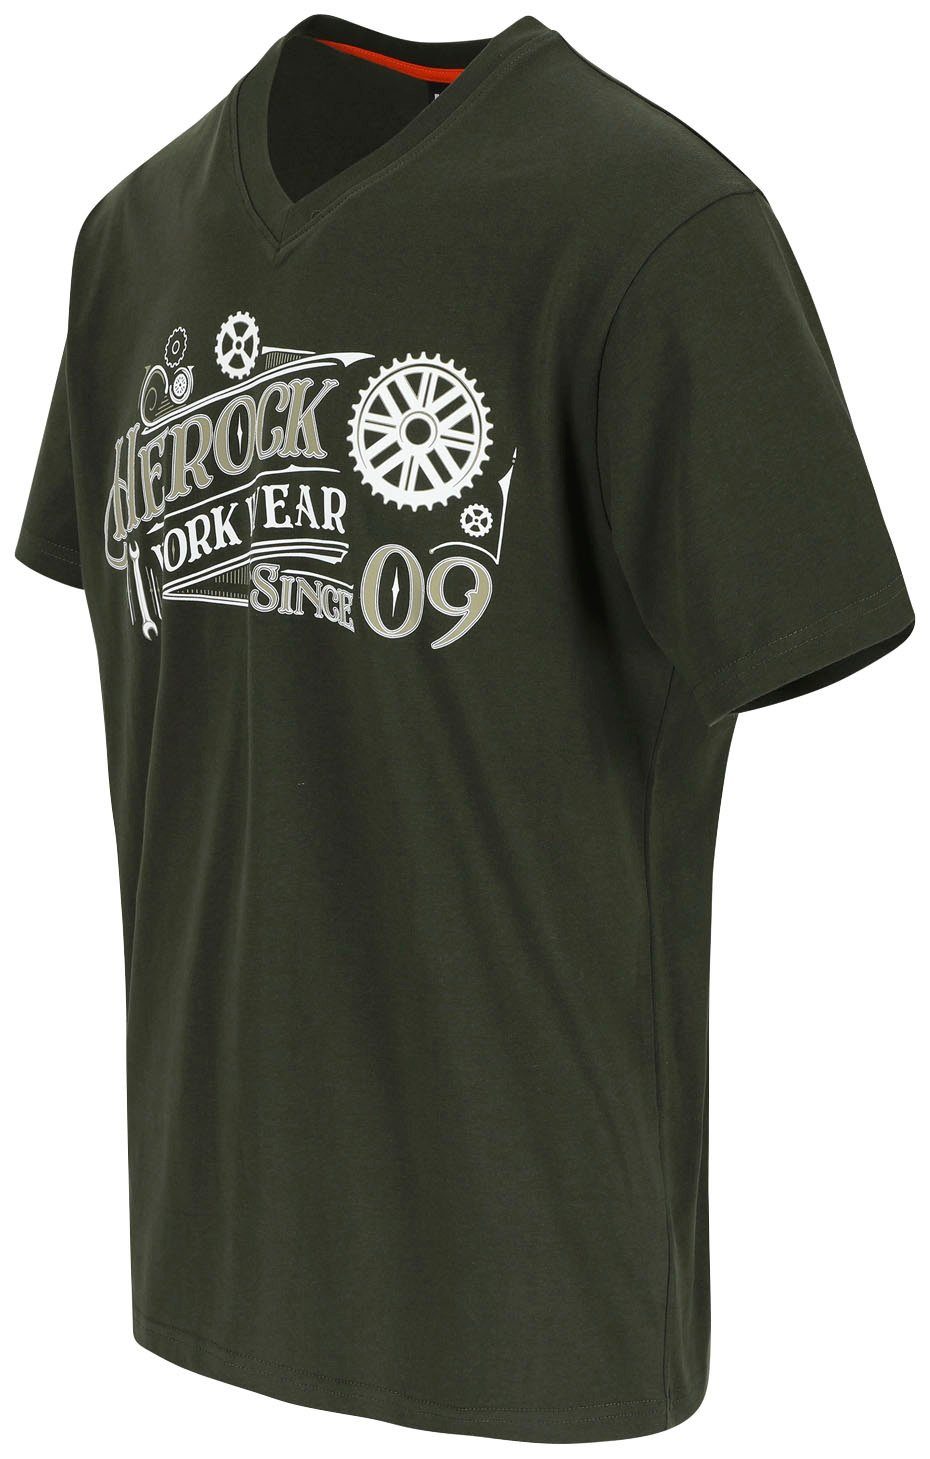 Limited Barber Herock Edition T-Shirt